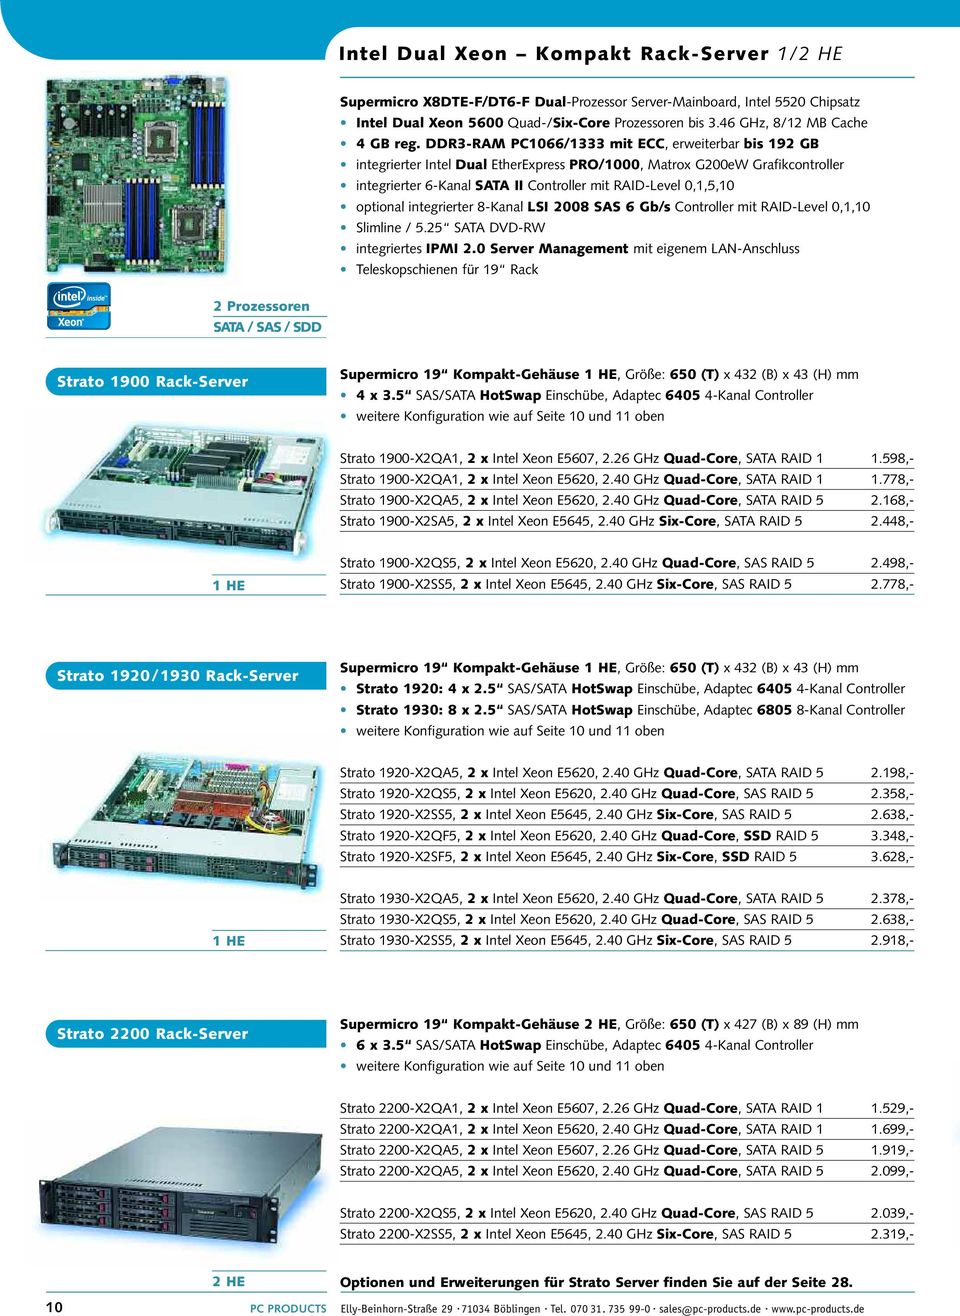 DDR3-RAM PC1066/1333 mit ECC, erweiterbar bis 192 GB integrierter Intel Dual EtherExpress PRO/1000, Matrox G200eW Grafikcontroller integrierter 6-Kanal SATA II Controller mit RAID-Level 0,1,5,10